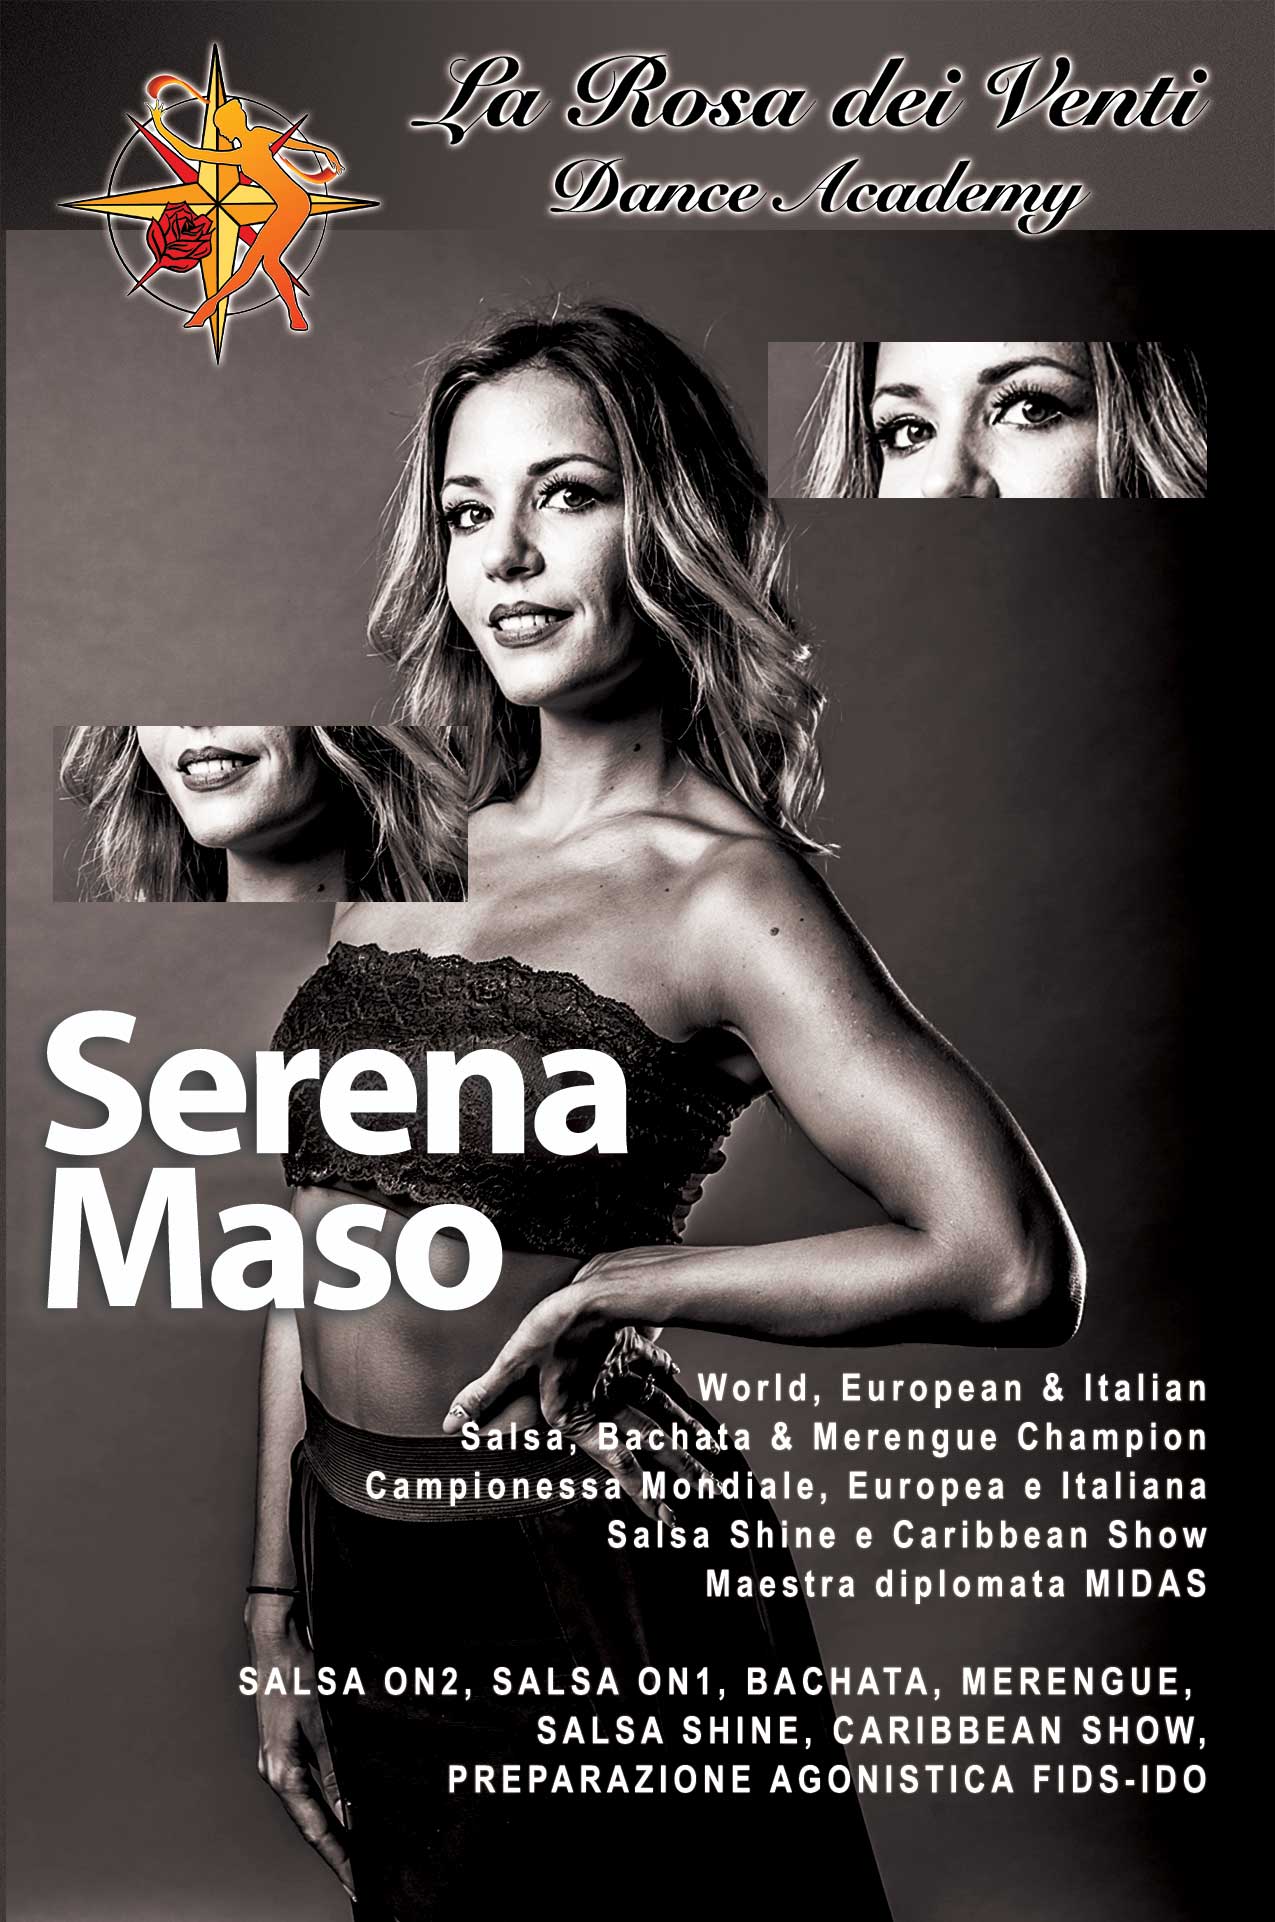 Serena Maso World European & Italian Champion Salsa Bachata & Merengue La Rosa dei Venti Dance Accademy